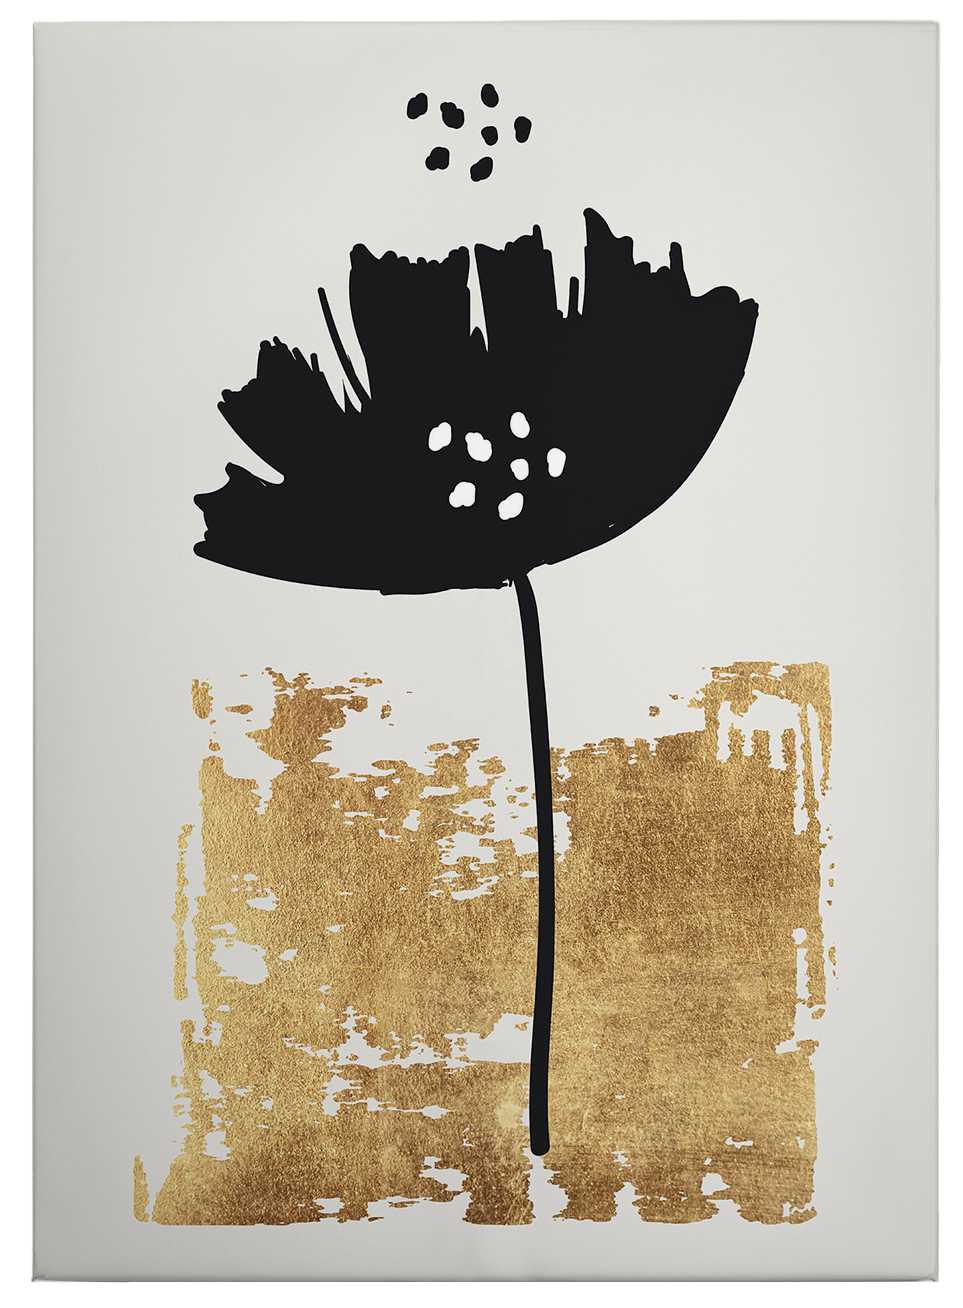             Leinwandbild "Schwarze Blume" Kubistika – 0,50 m x 0,70 m
        